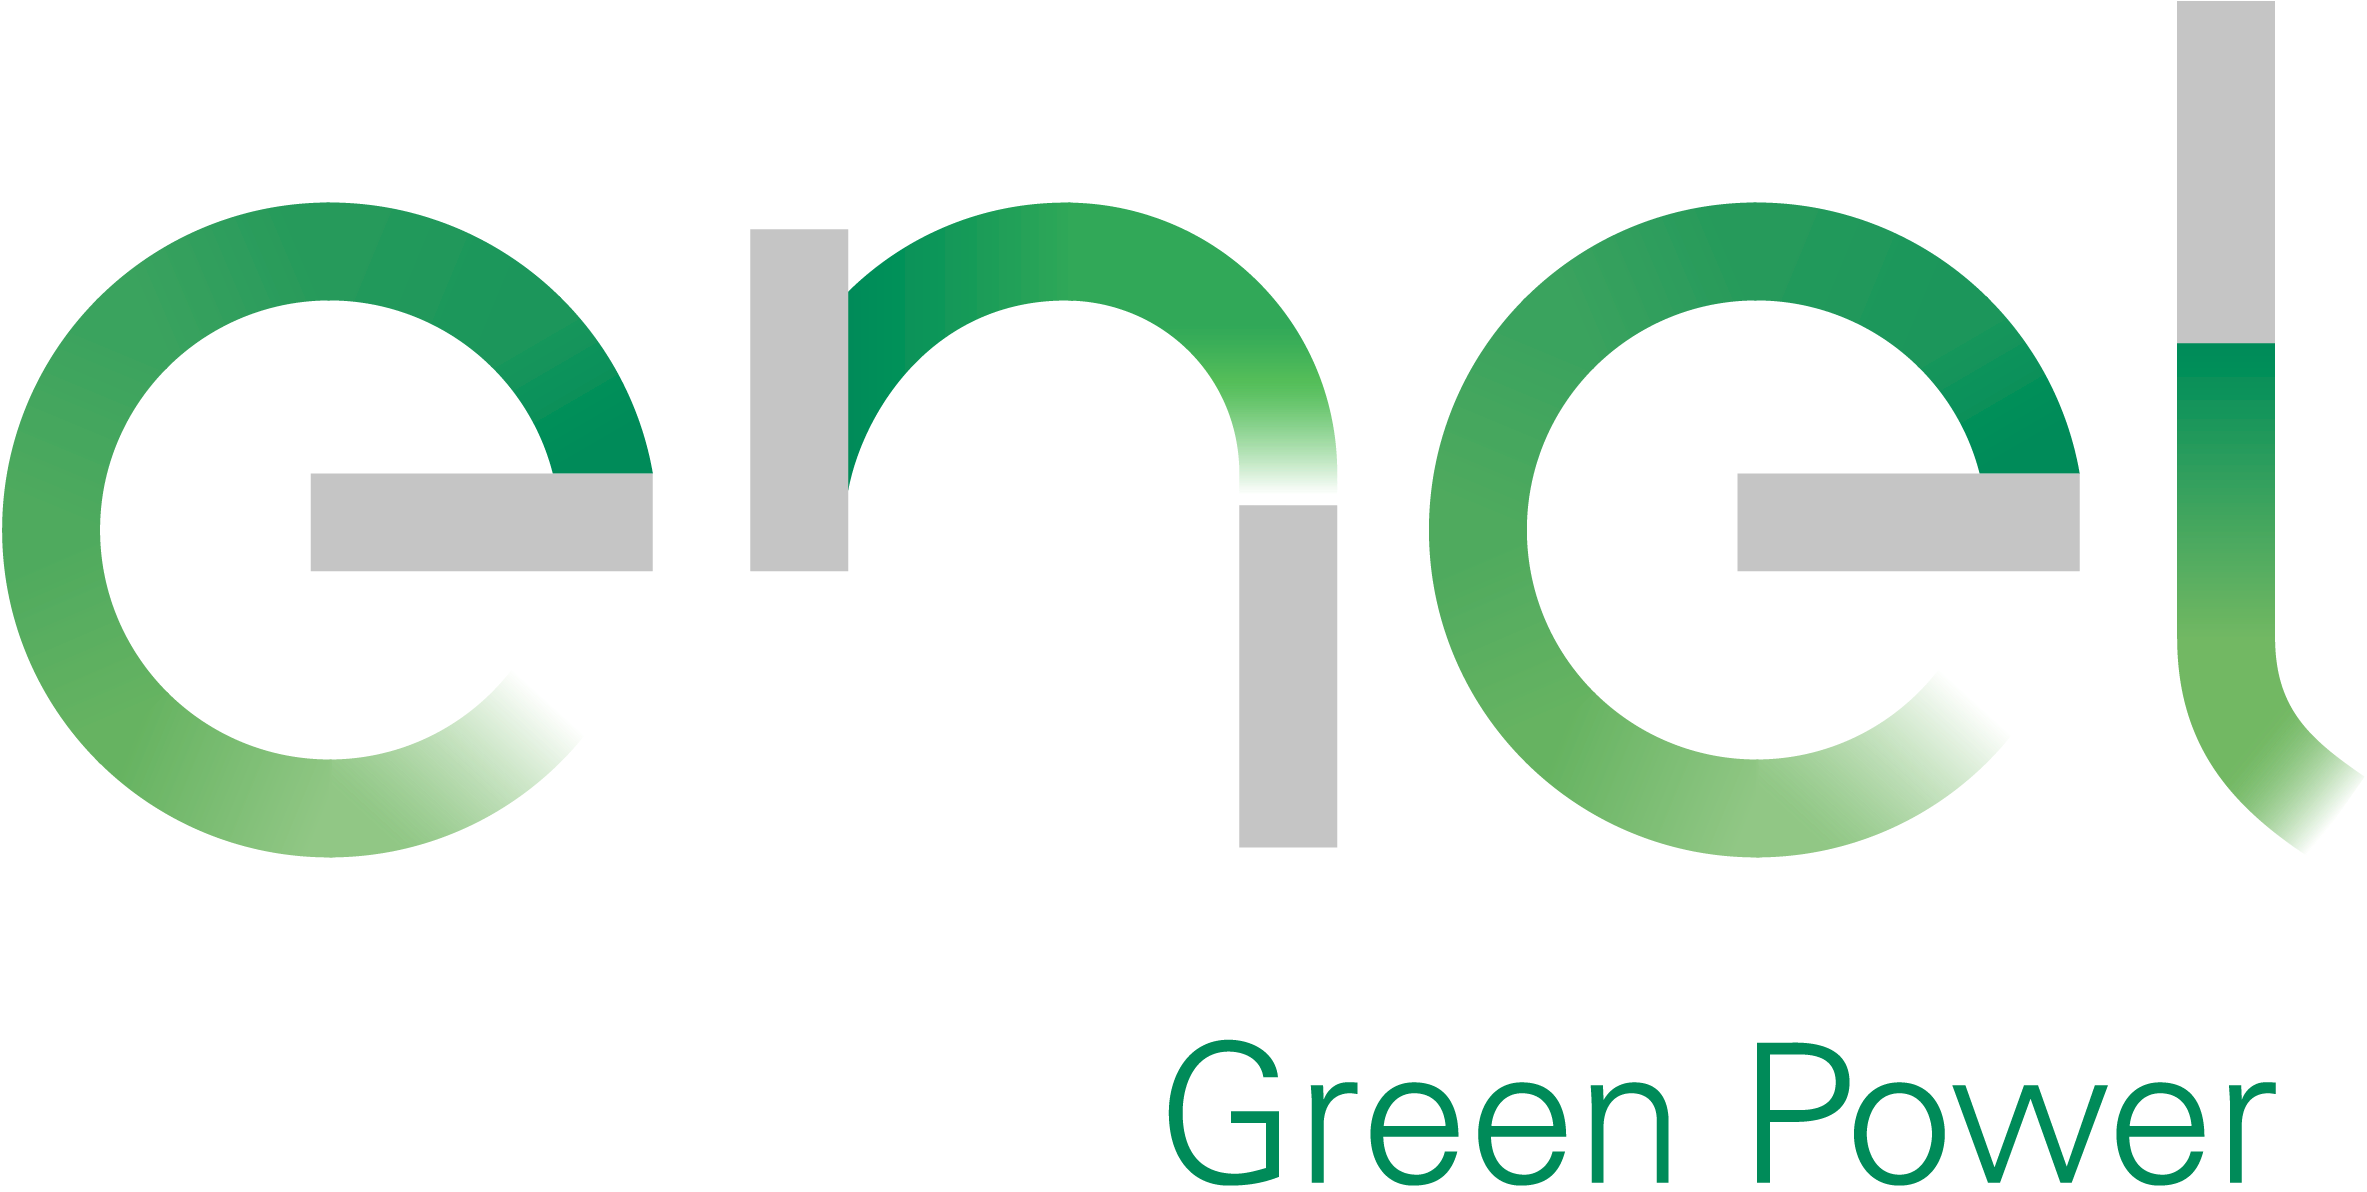 Enel Green Power Panamá